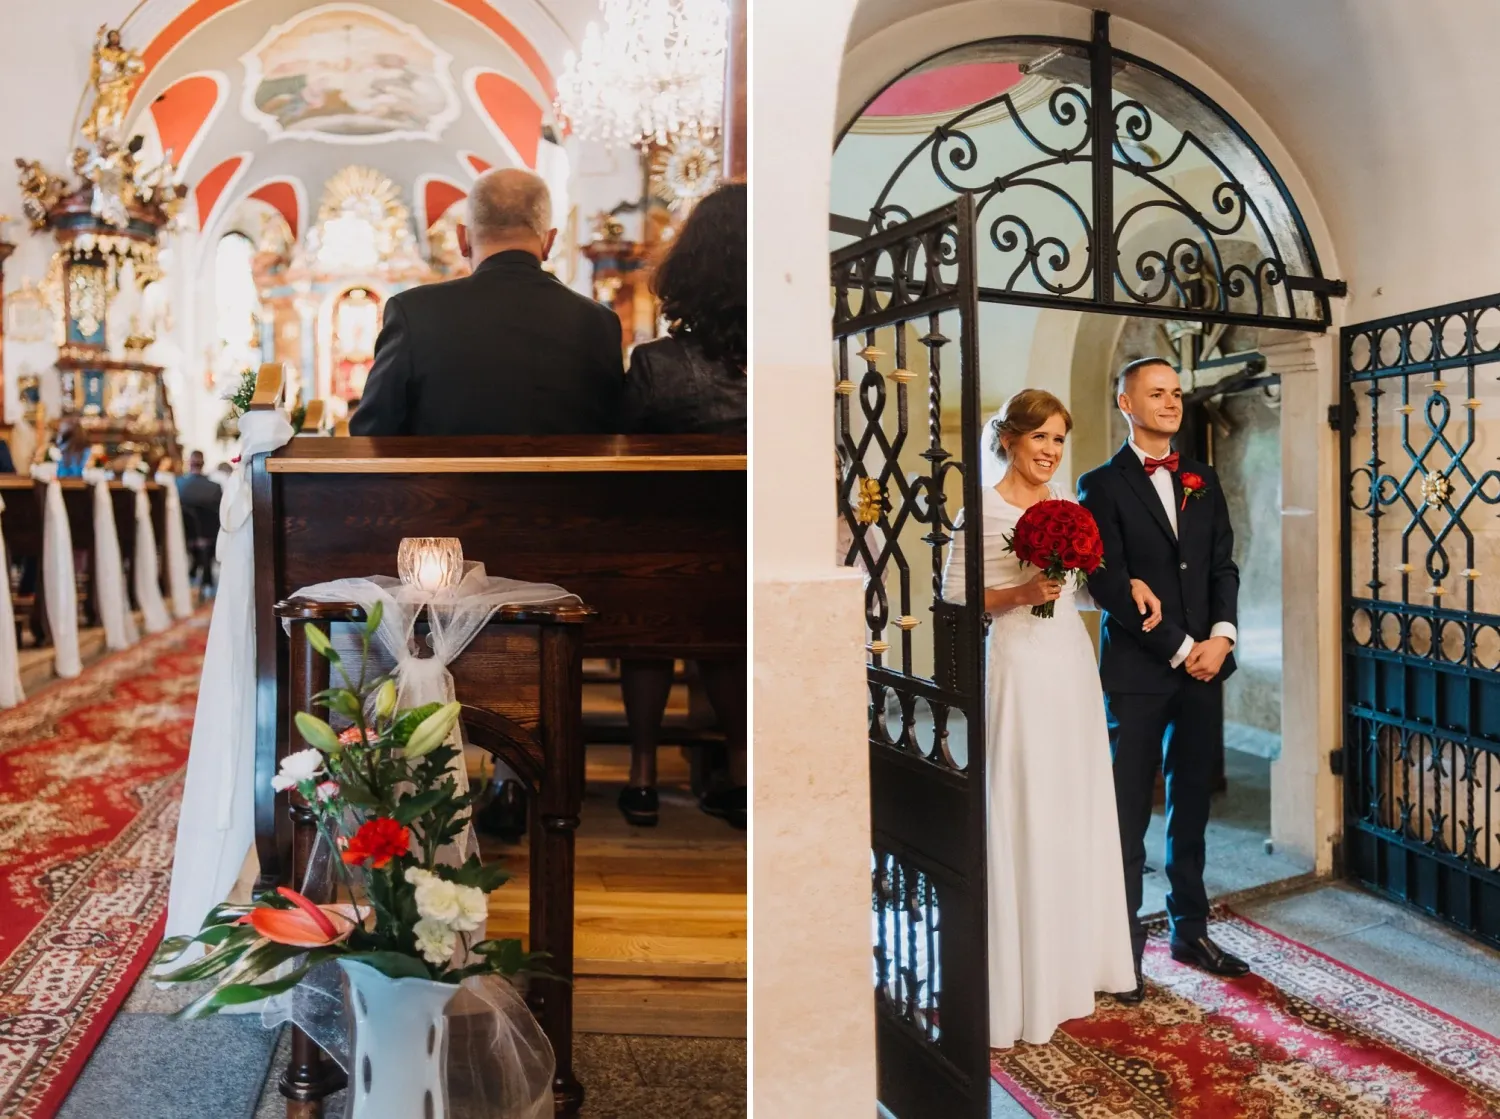 martynahubert_wedding_13.webp - Martyna & Hubert- Monika Chmielewska - wedding, portaits, family photography - Munich